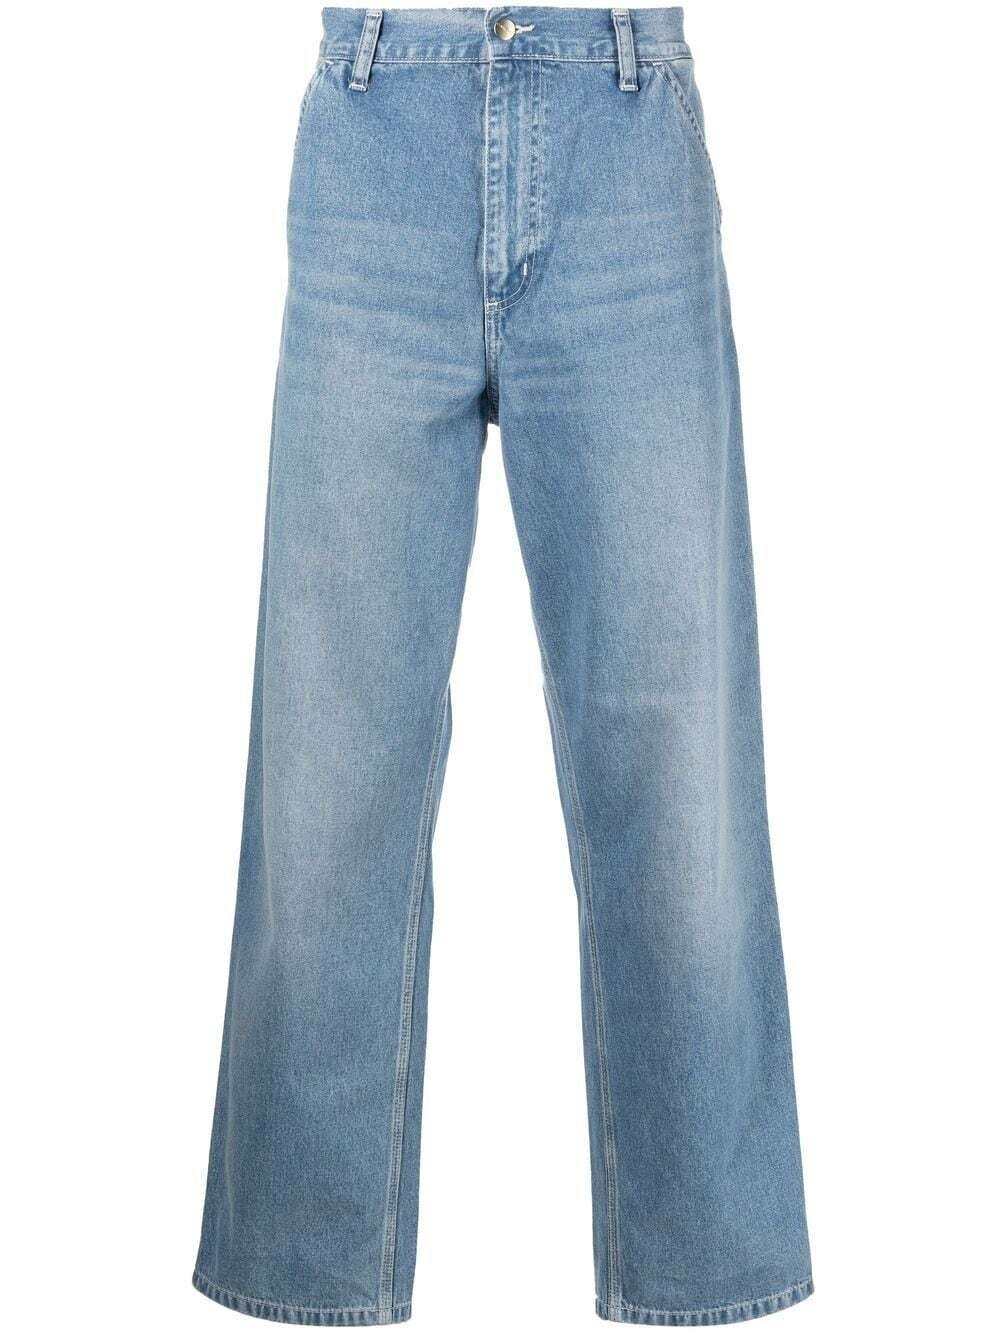 CARHARTT - Cotton Denim Jeans Carhartt WIP